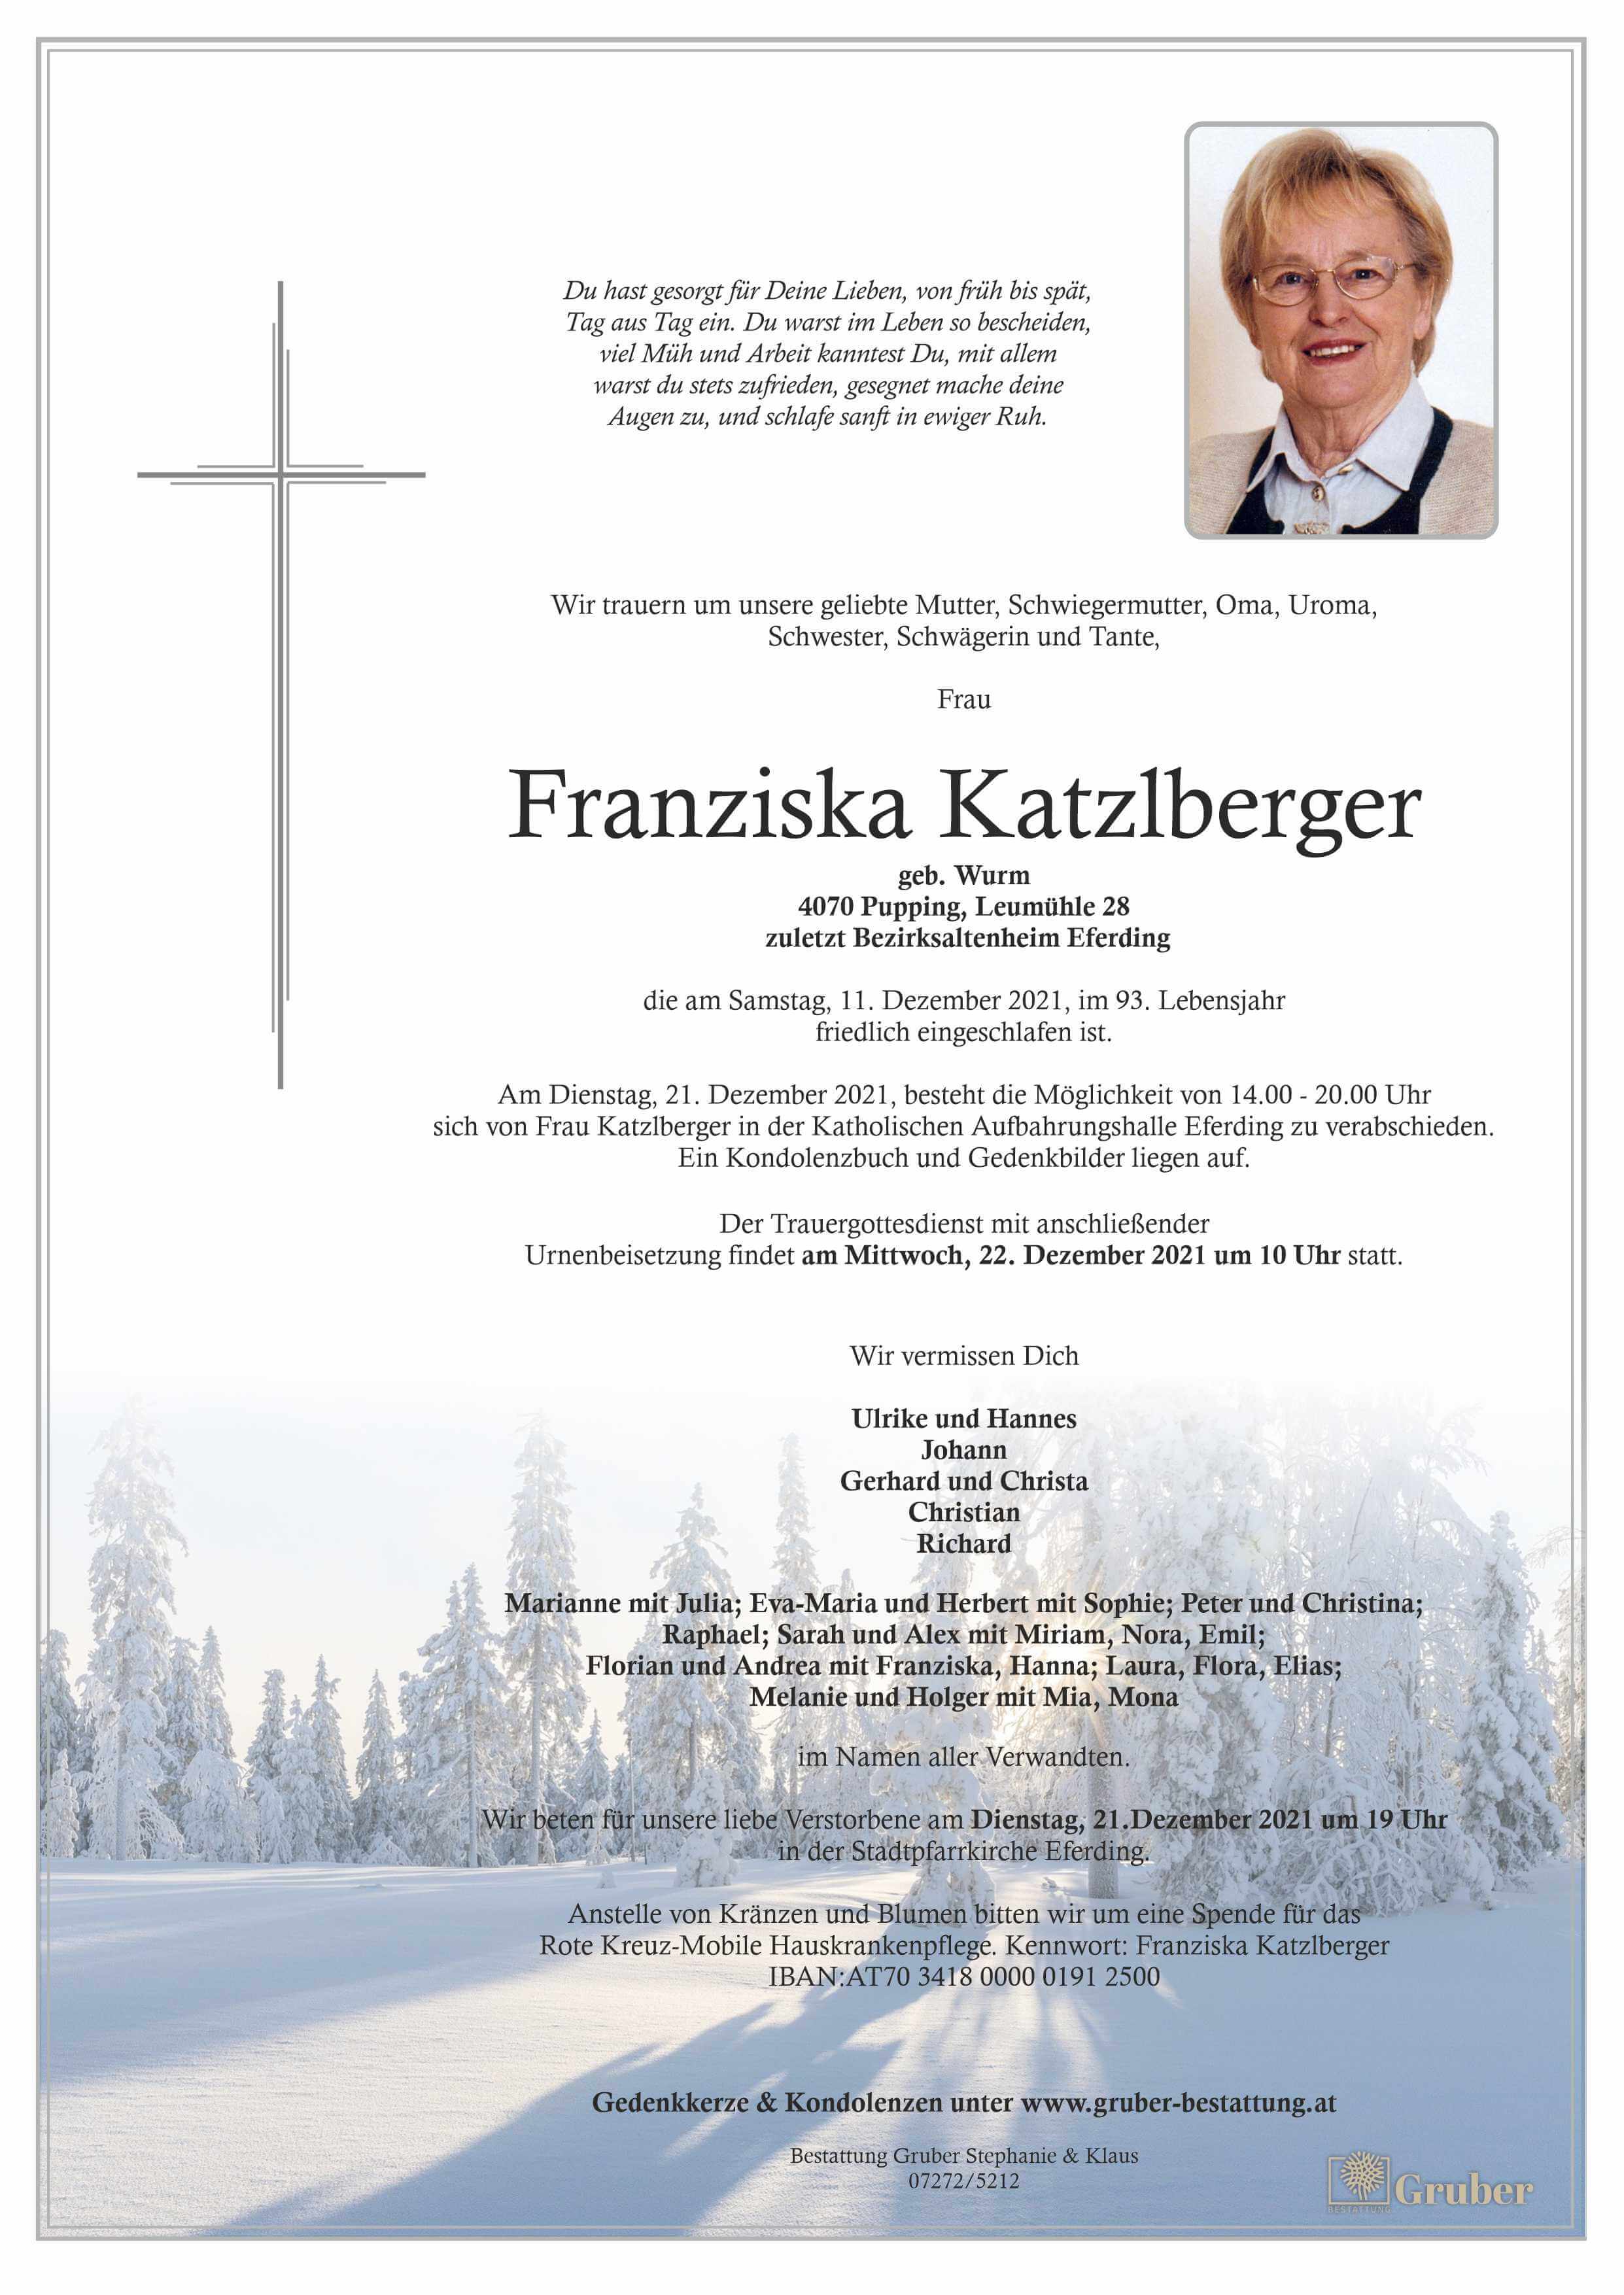 Franziska Katzlberger (Eferding)